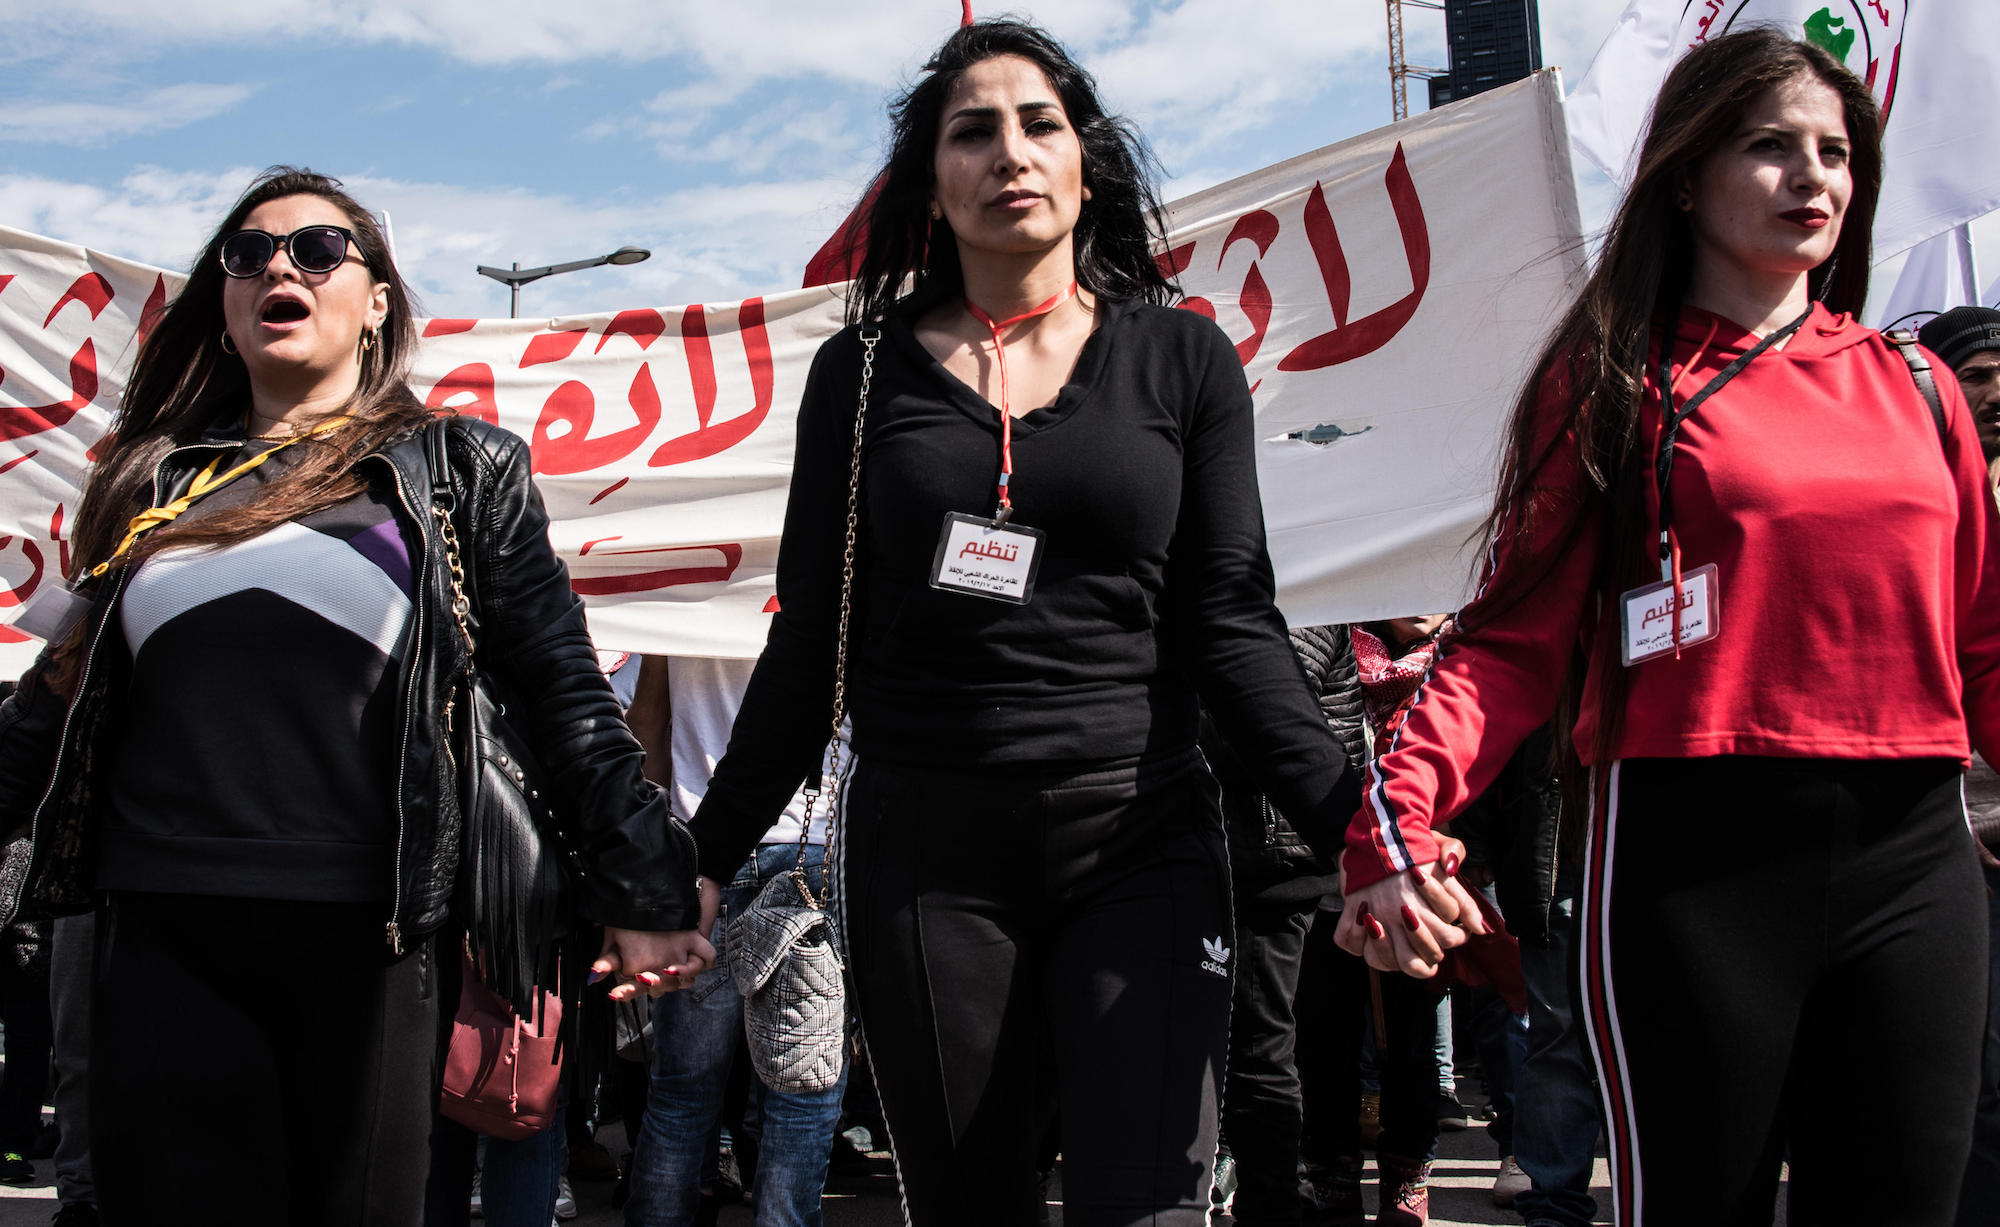 Marking International Women’s Day in Lebanon